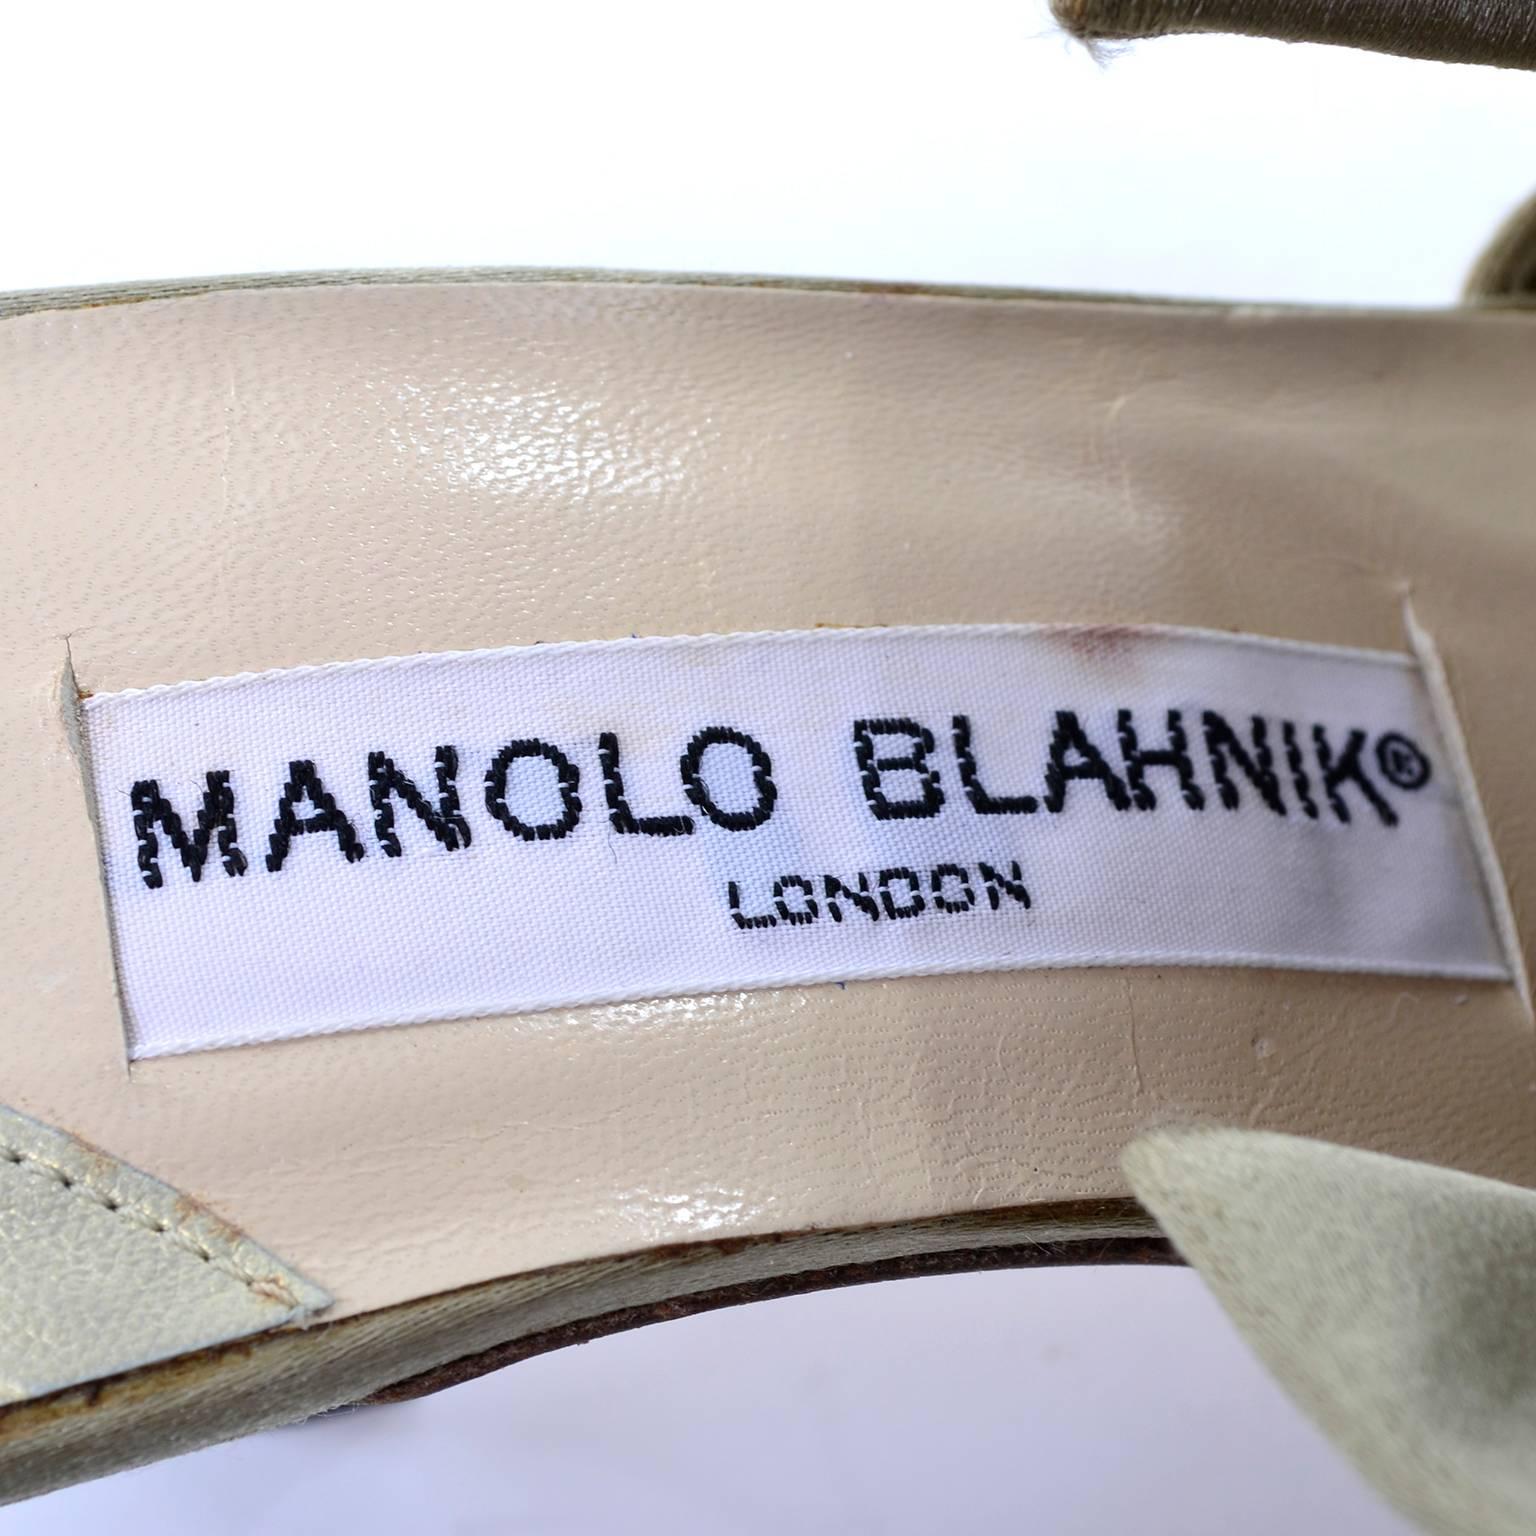 Rare 1980s Manolo Blahnik London Shoes Vintage Ruffled Satin Bow Mules Unworn 39 2